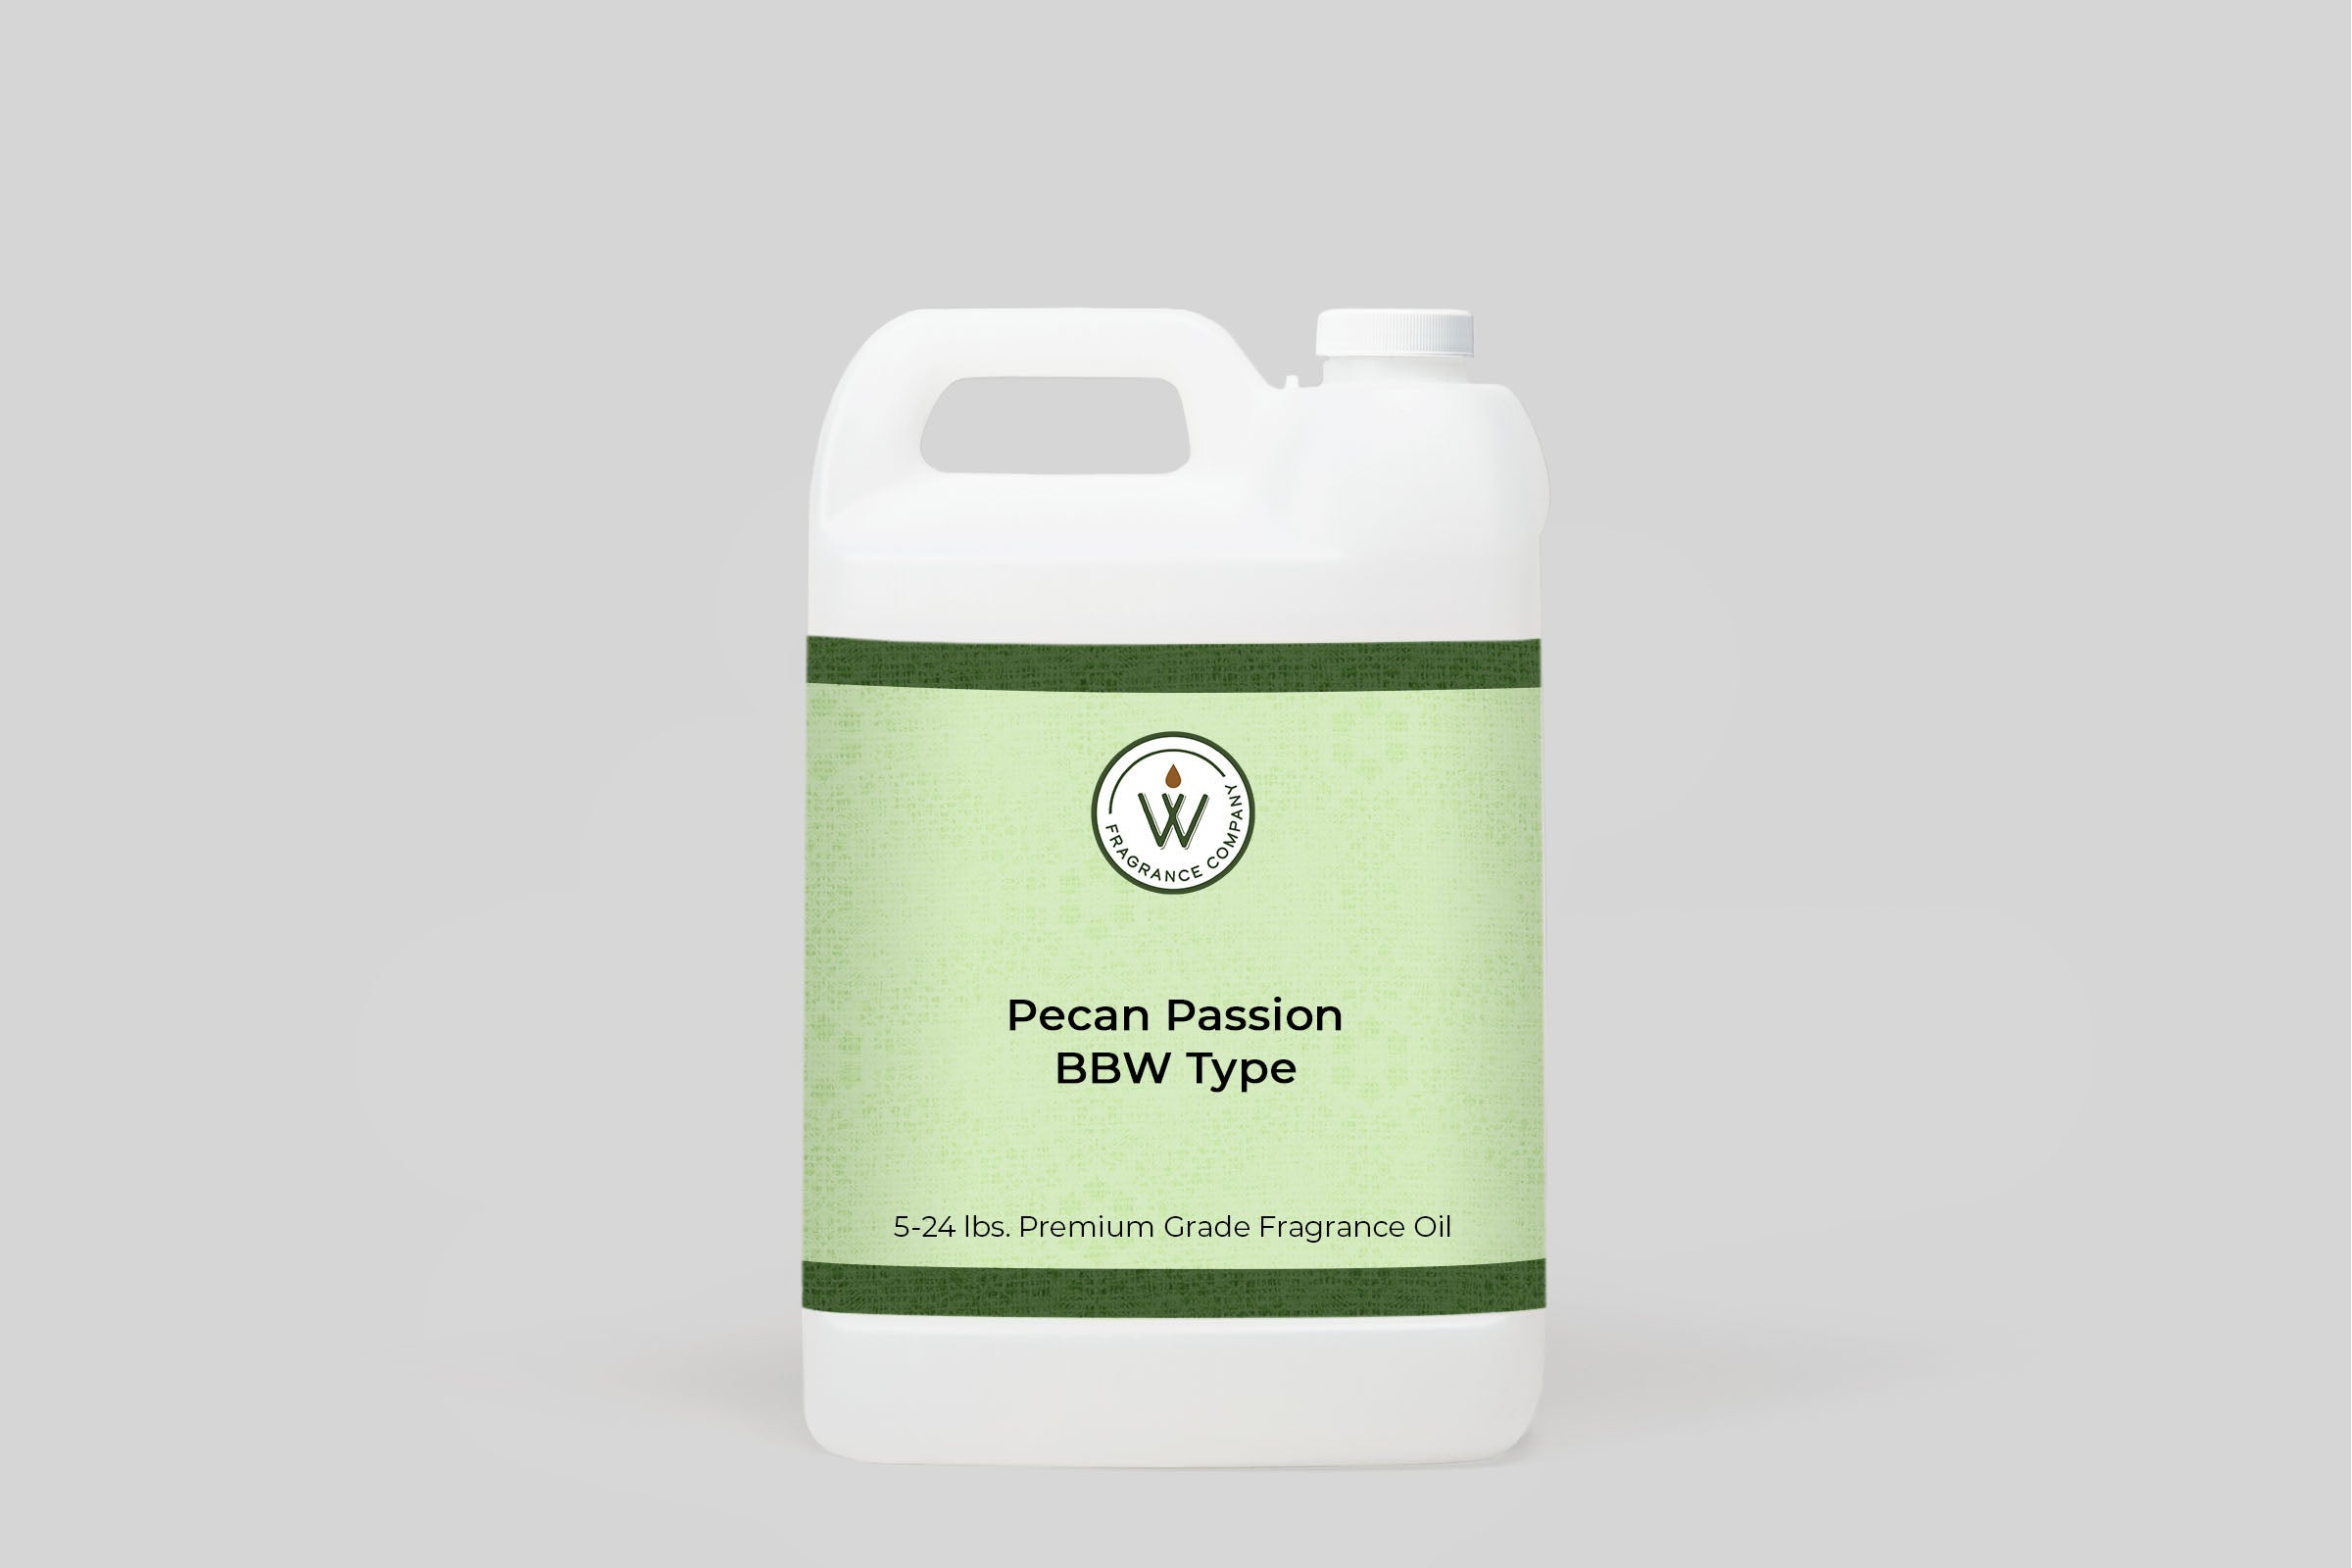 Pecan Passion BBW Type Fragrance Oil